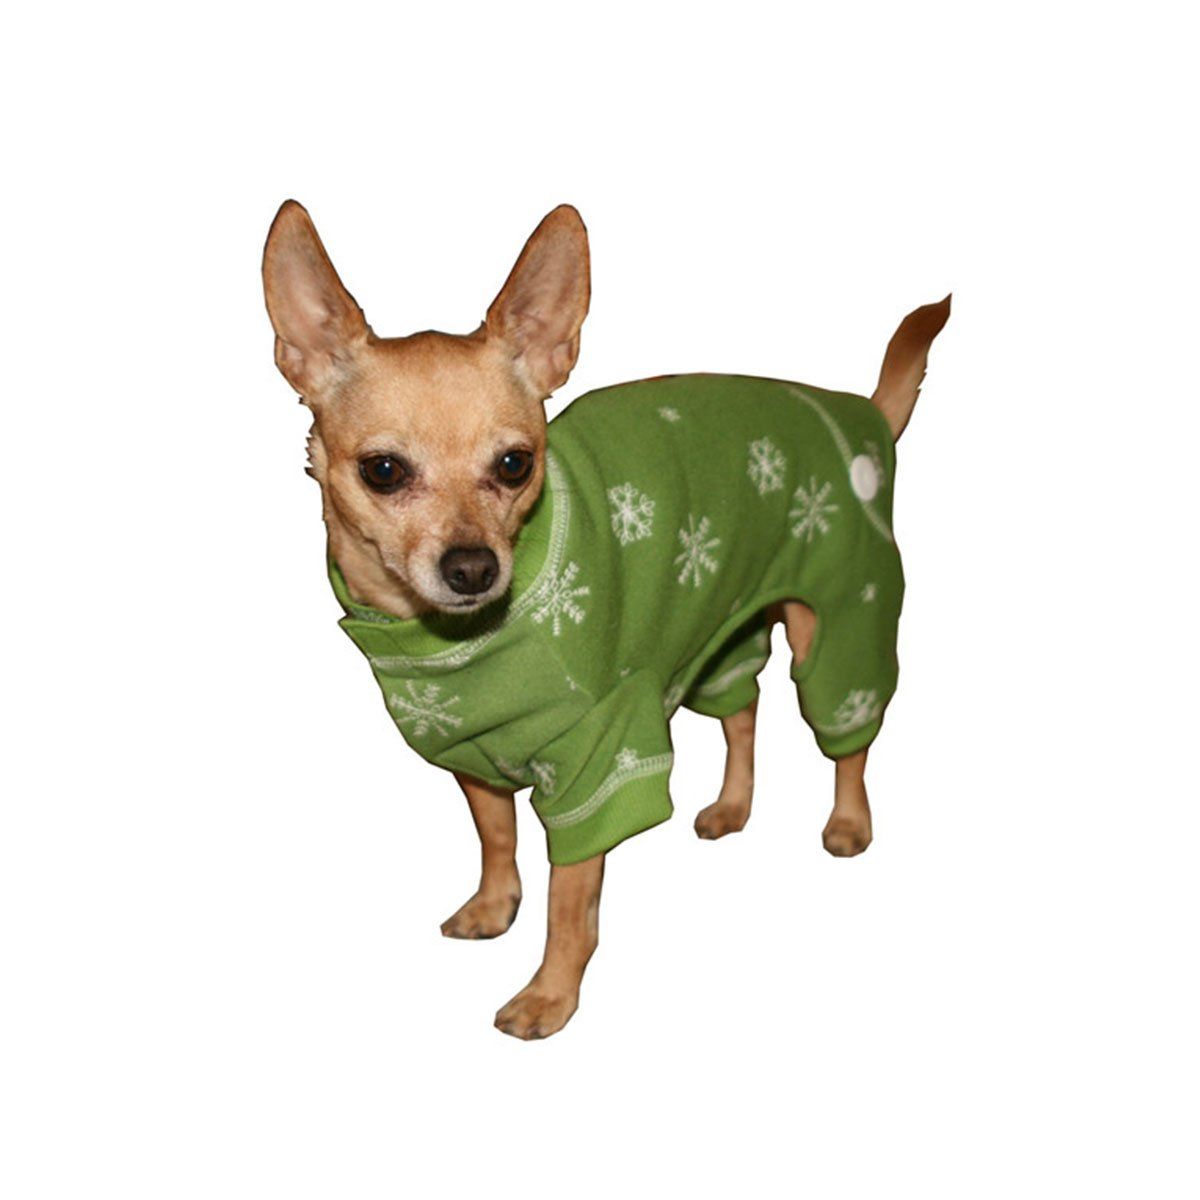 Snowflake Longjohn Dog Pajama in Green | Pawlicious & Company